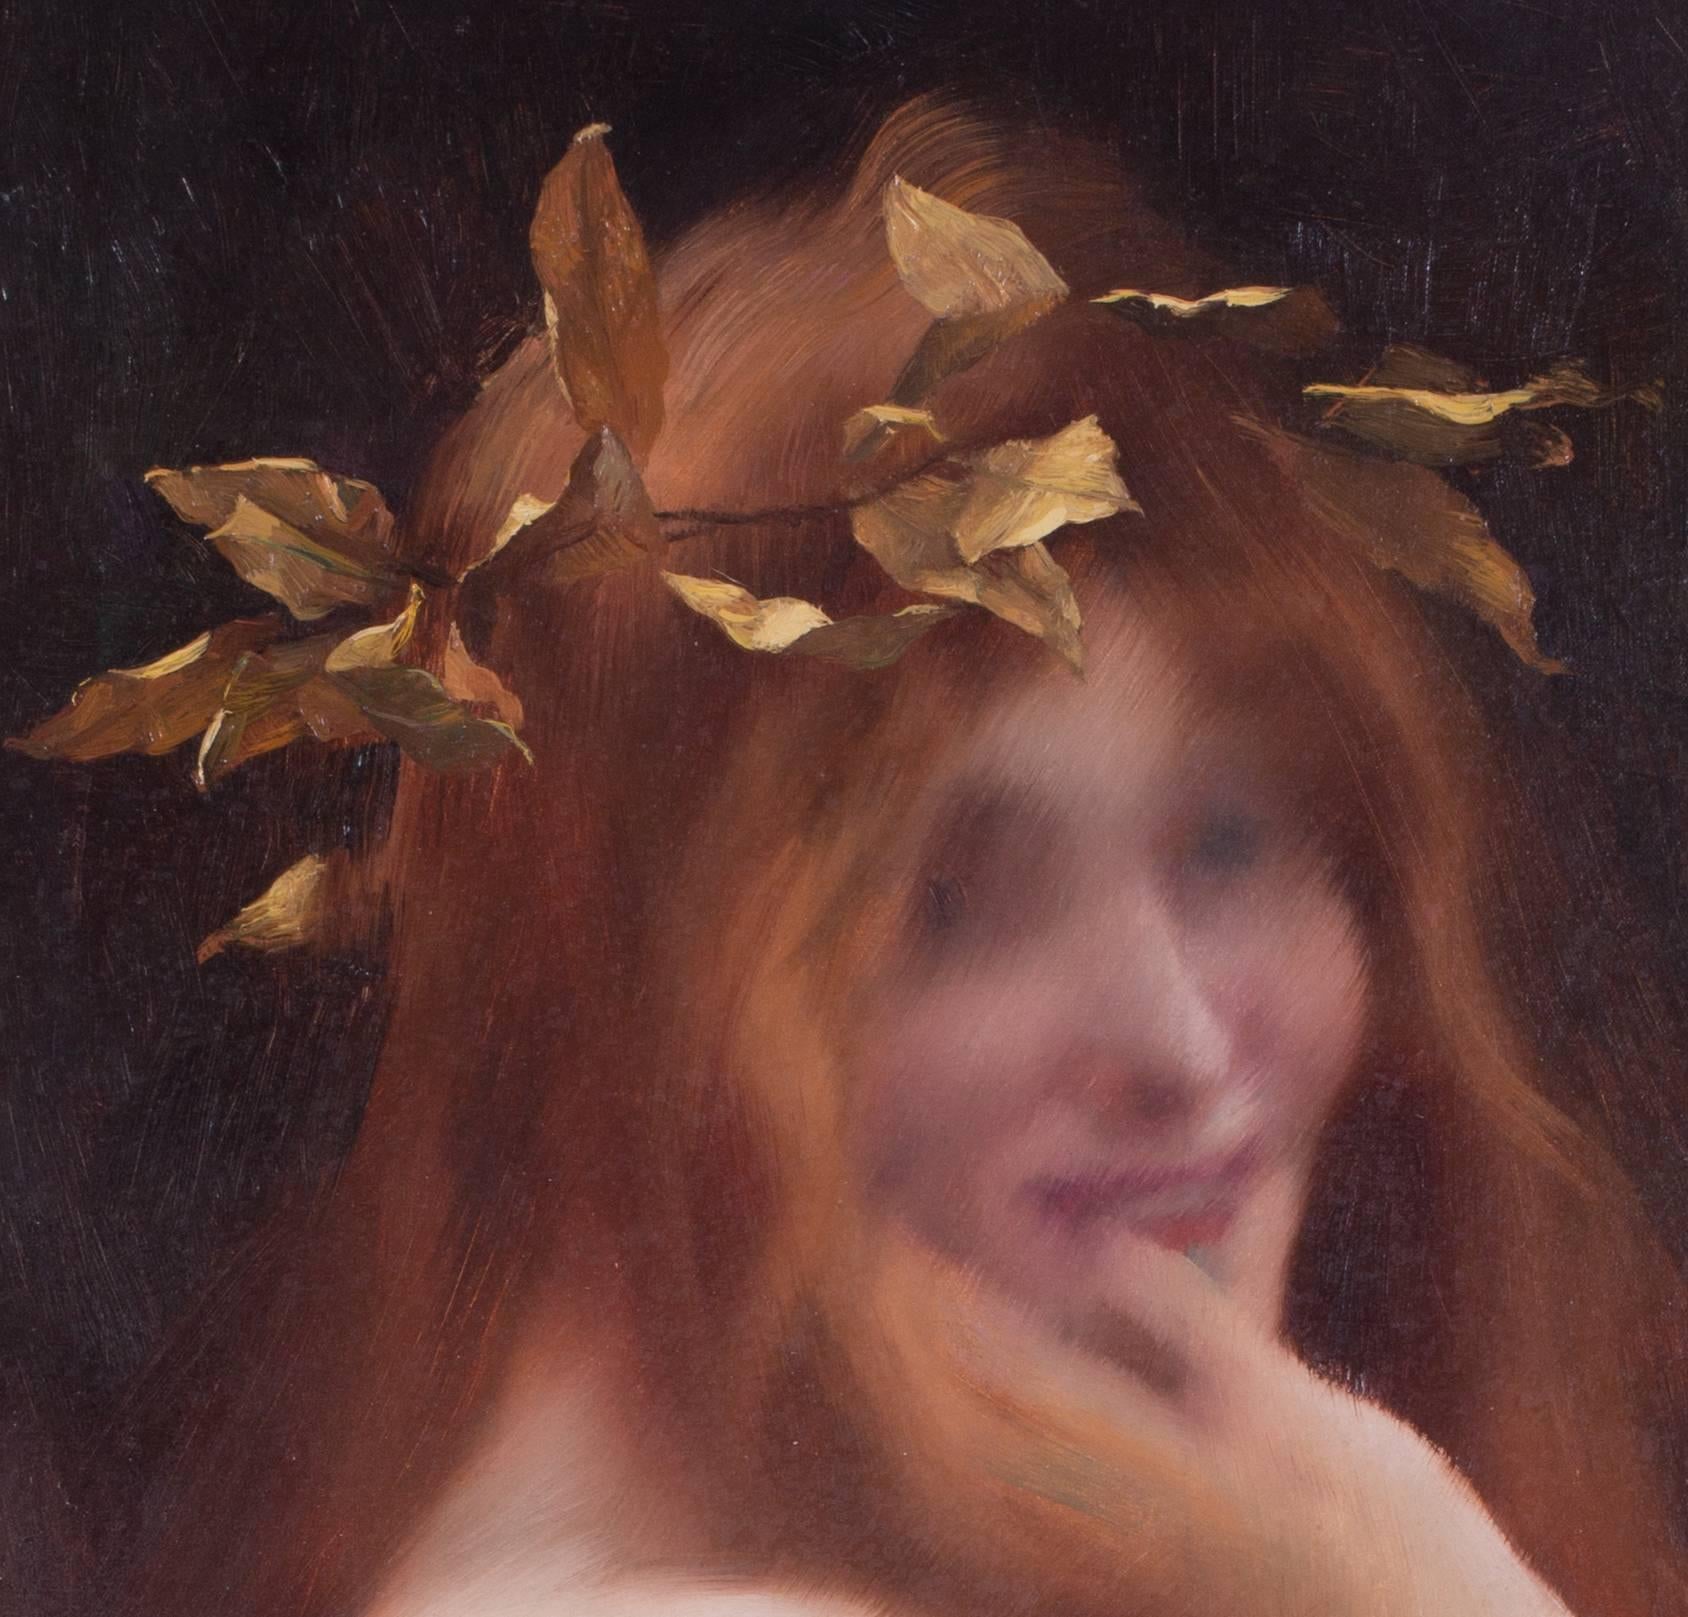 Maiden of Autumn - Impressionist Painting by Albert Besnard